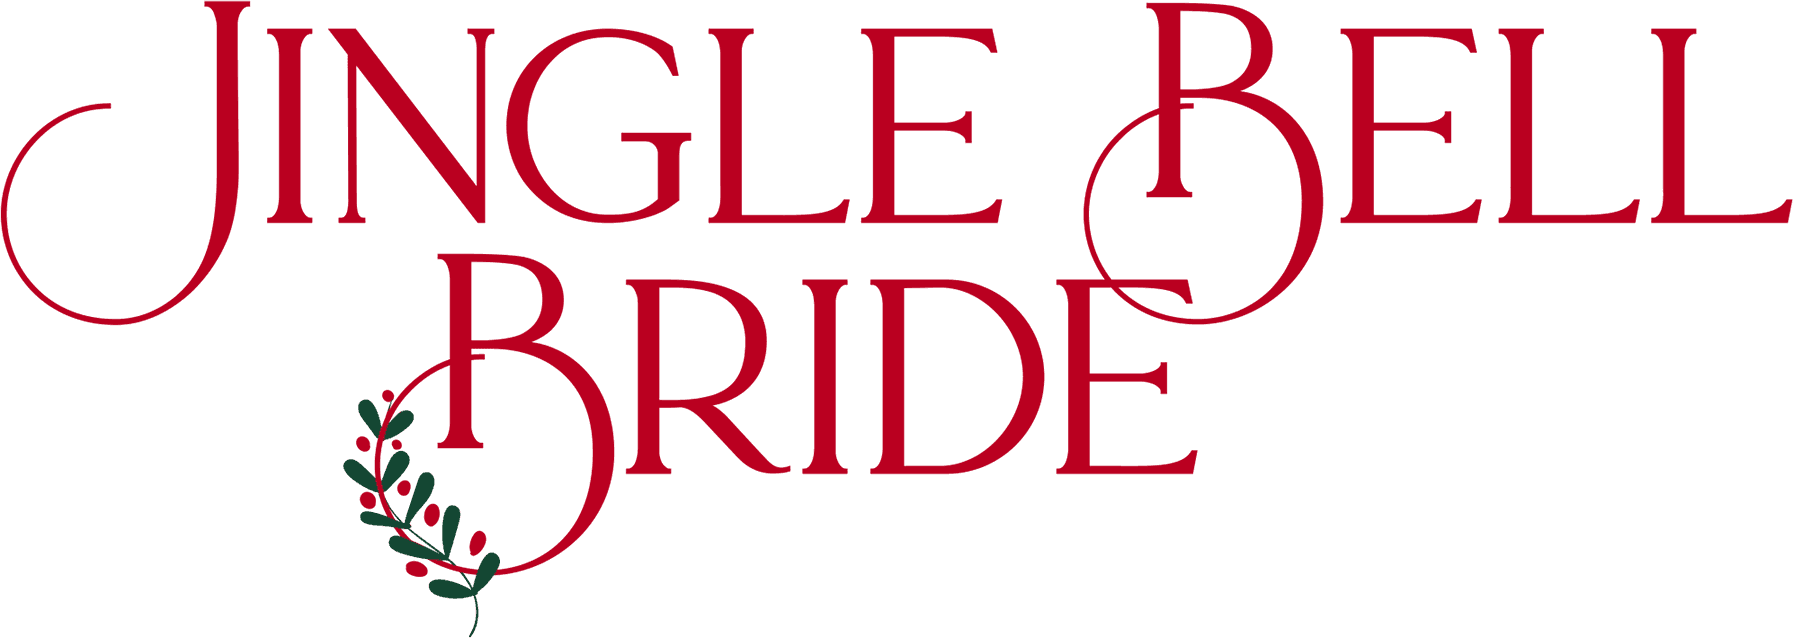 Jingle Bell Bride logo